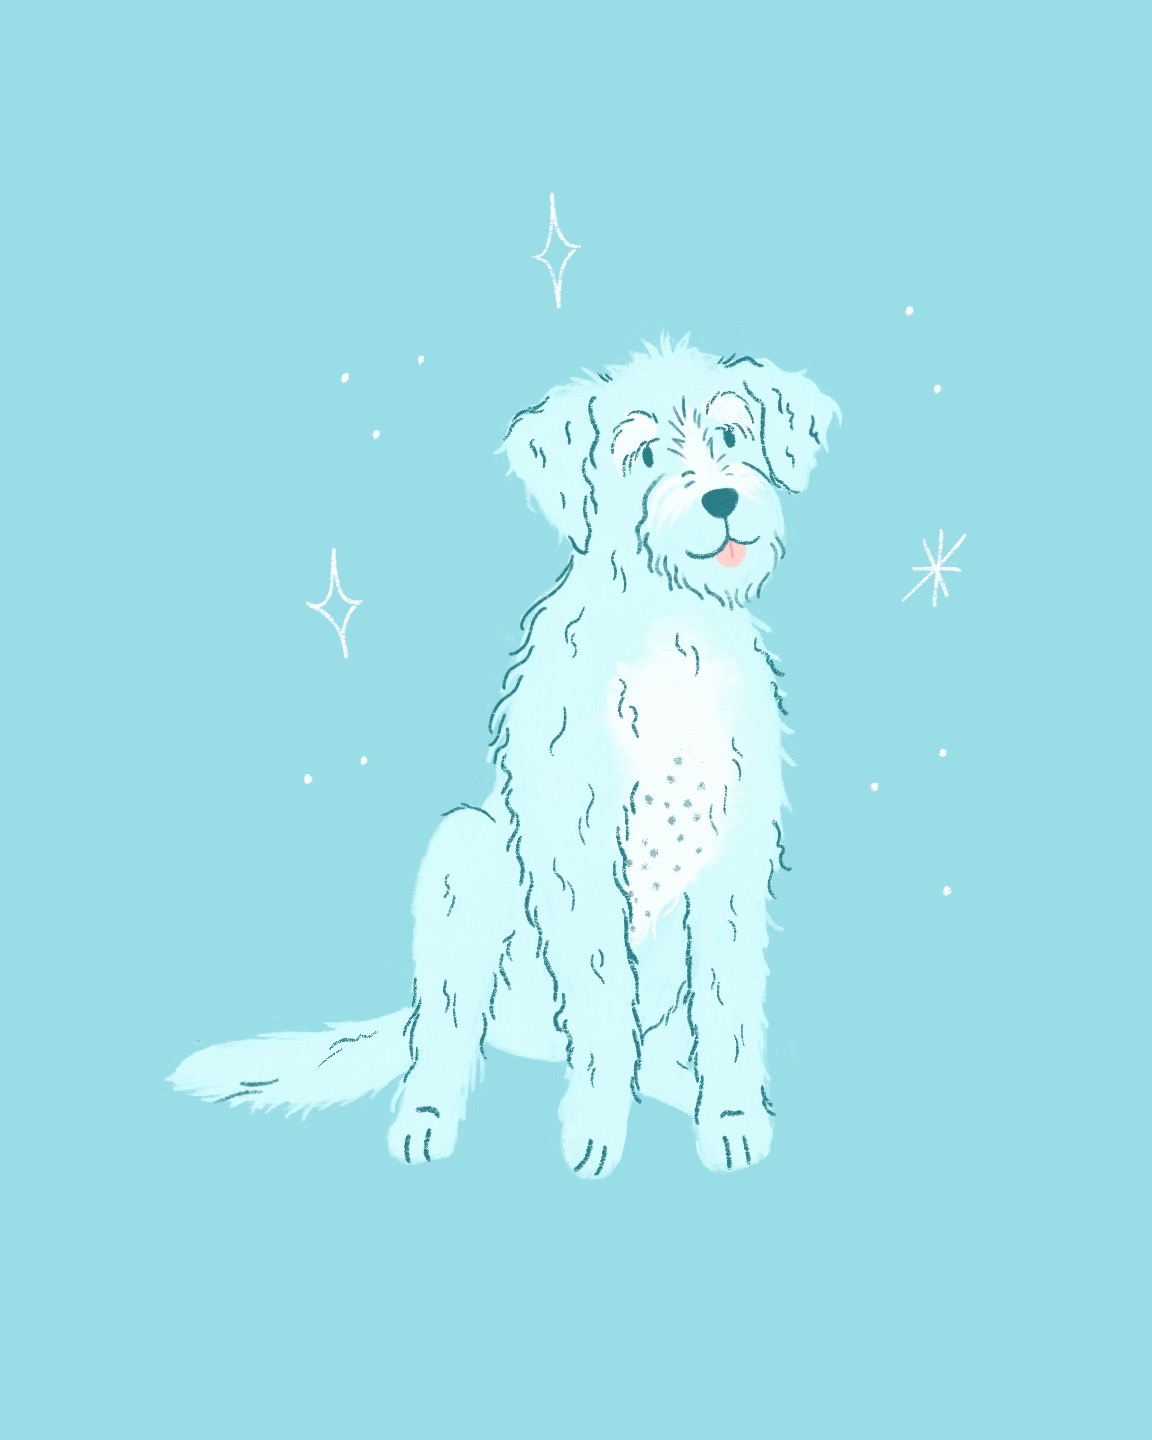 An illustration of a blue dog sitting